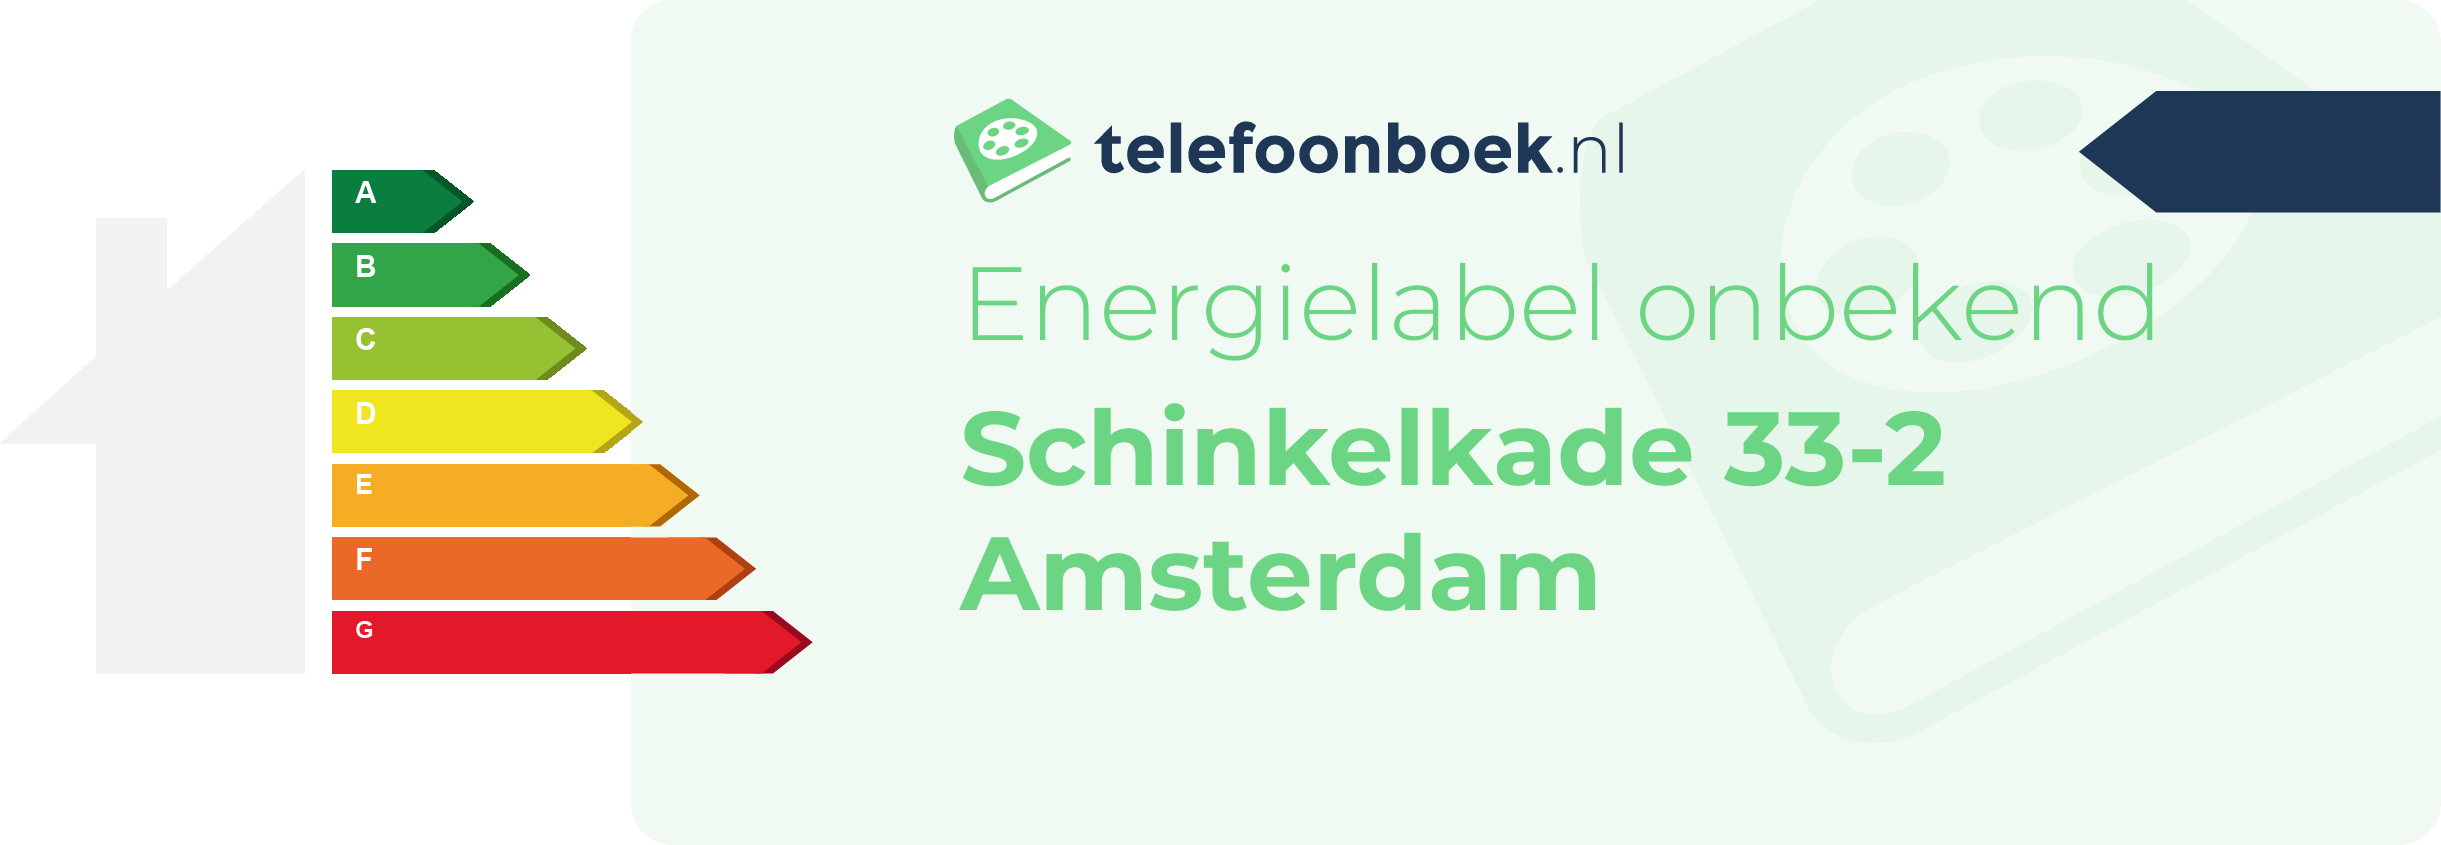 Energielabel Schinkelkade 33-2 Amsterdam